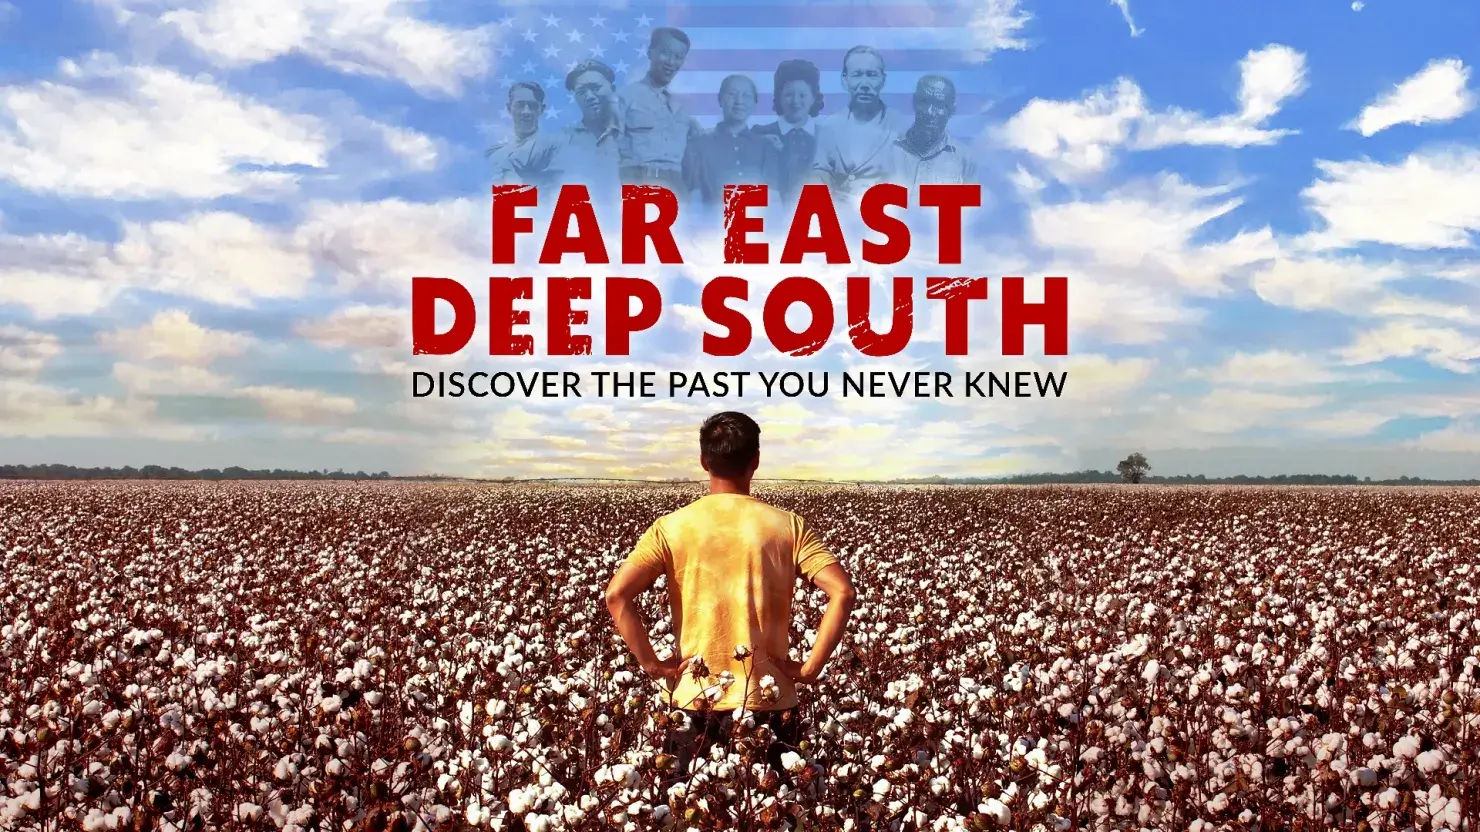 Far East Deep South Film Screening